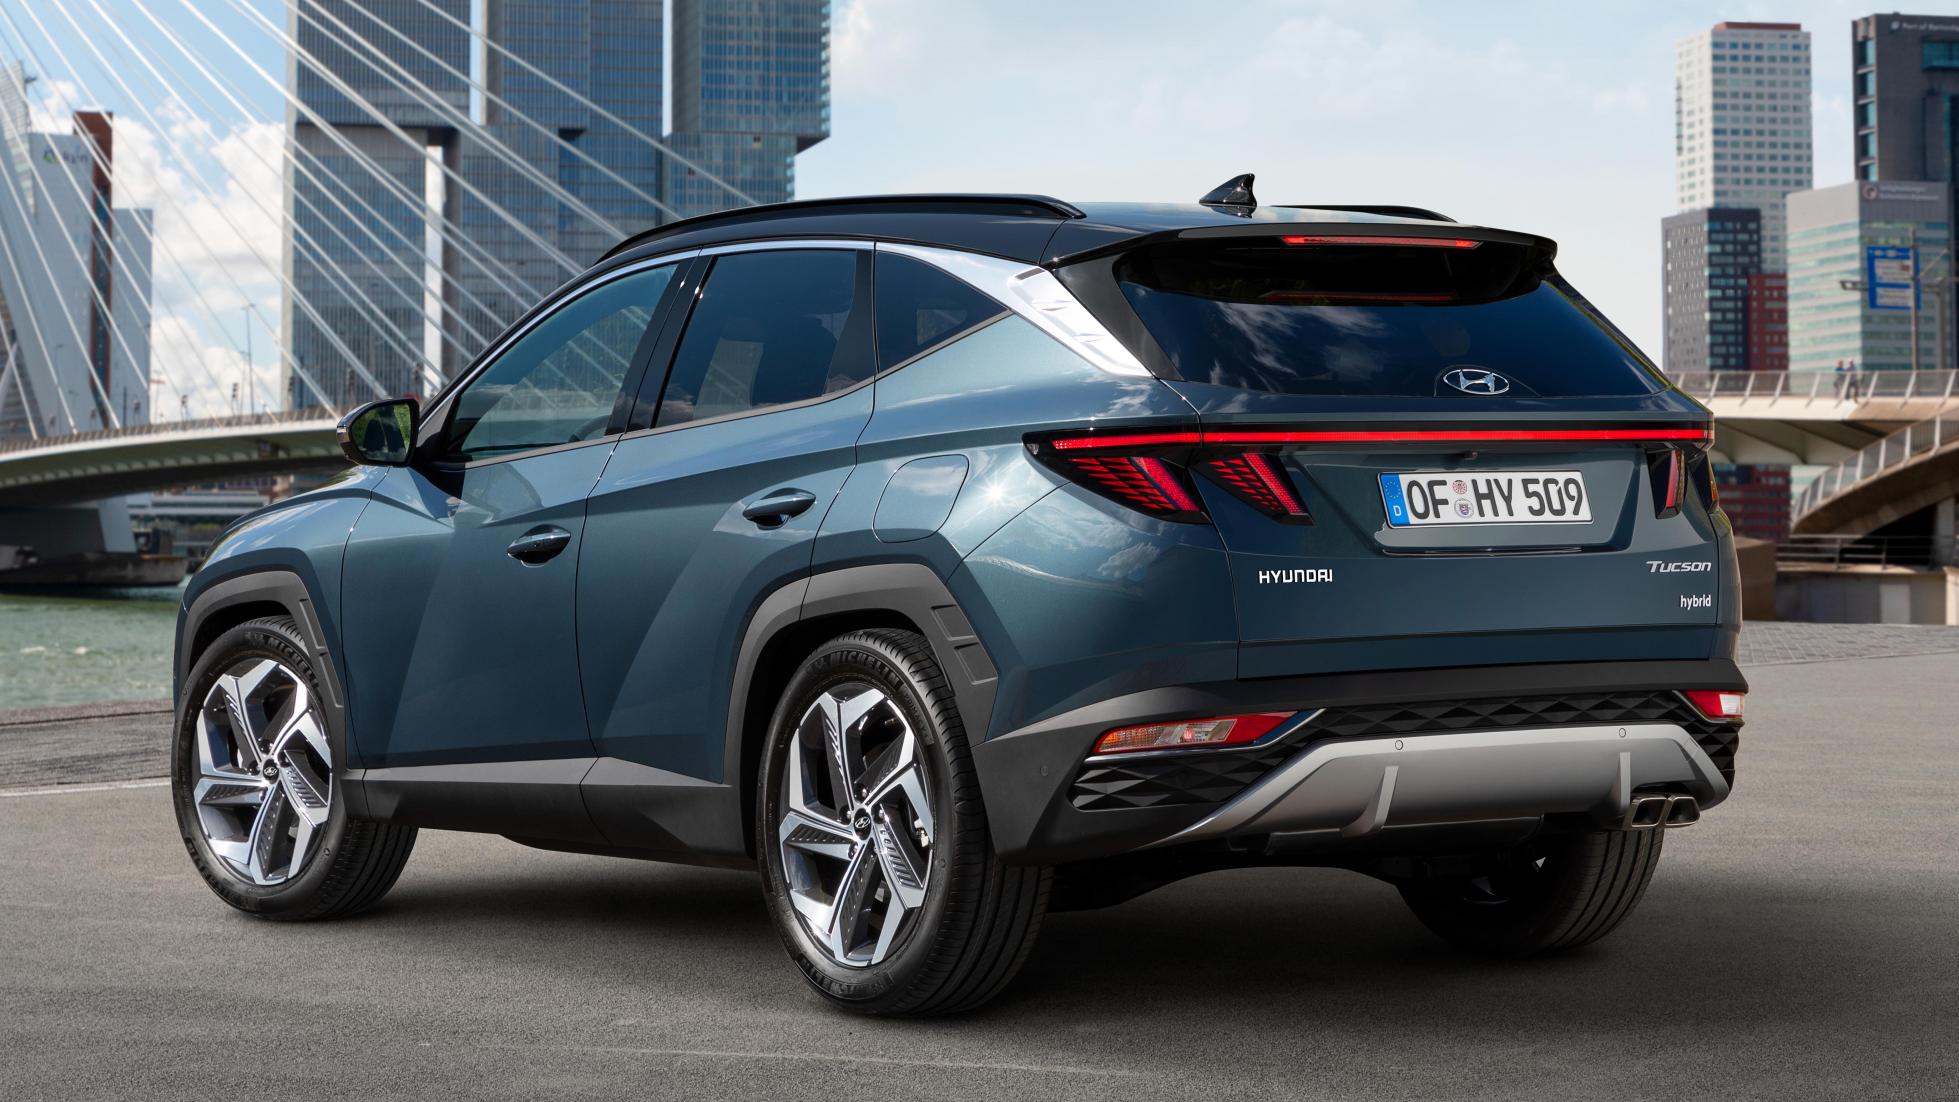 TopGear | The new Hyundai Tucson has a very bold face